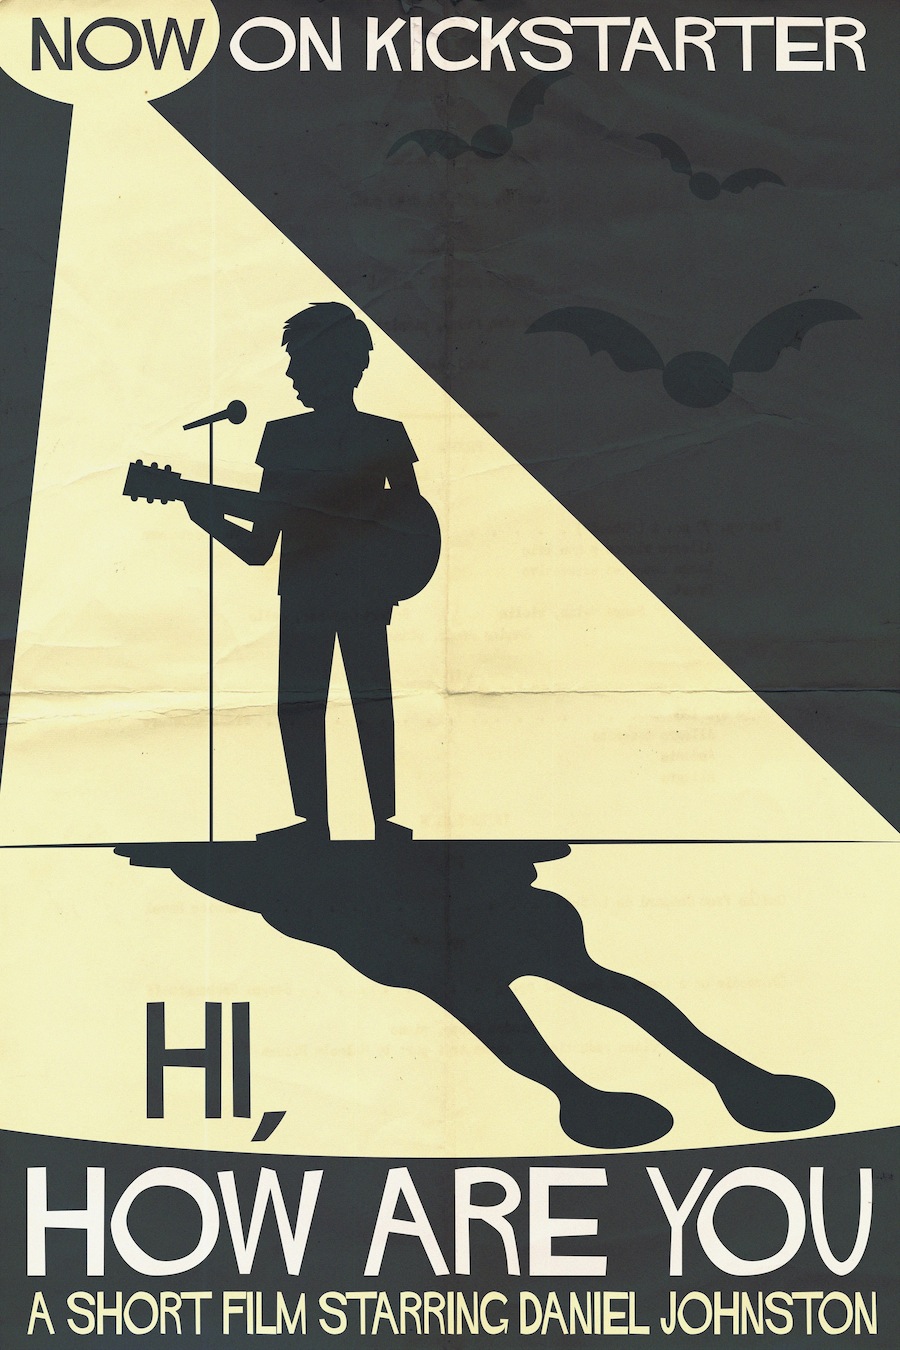 Hi, How Are You: A Short Film Starring Daniel Johnston Launches Kickstarter Campaign